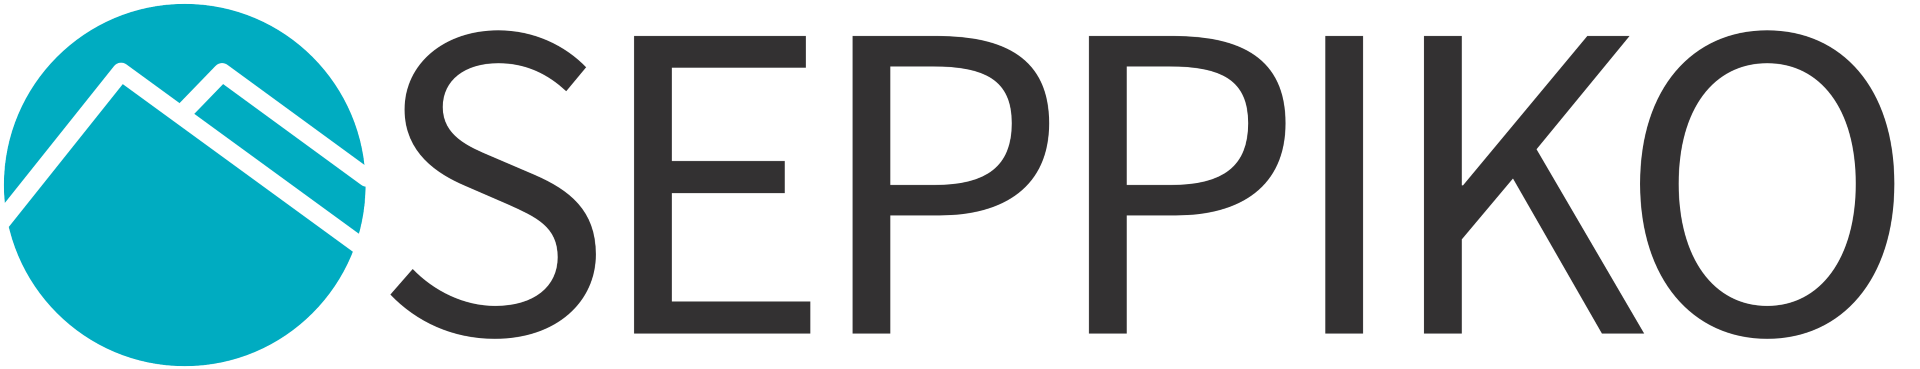 Seppiko Project Logo